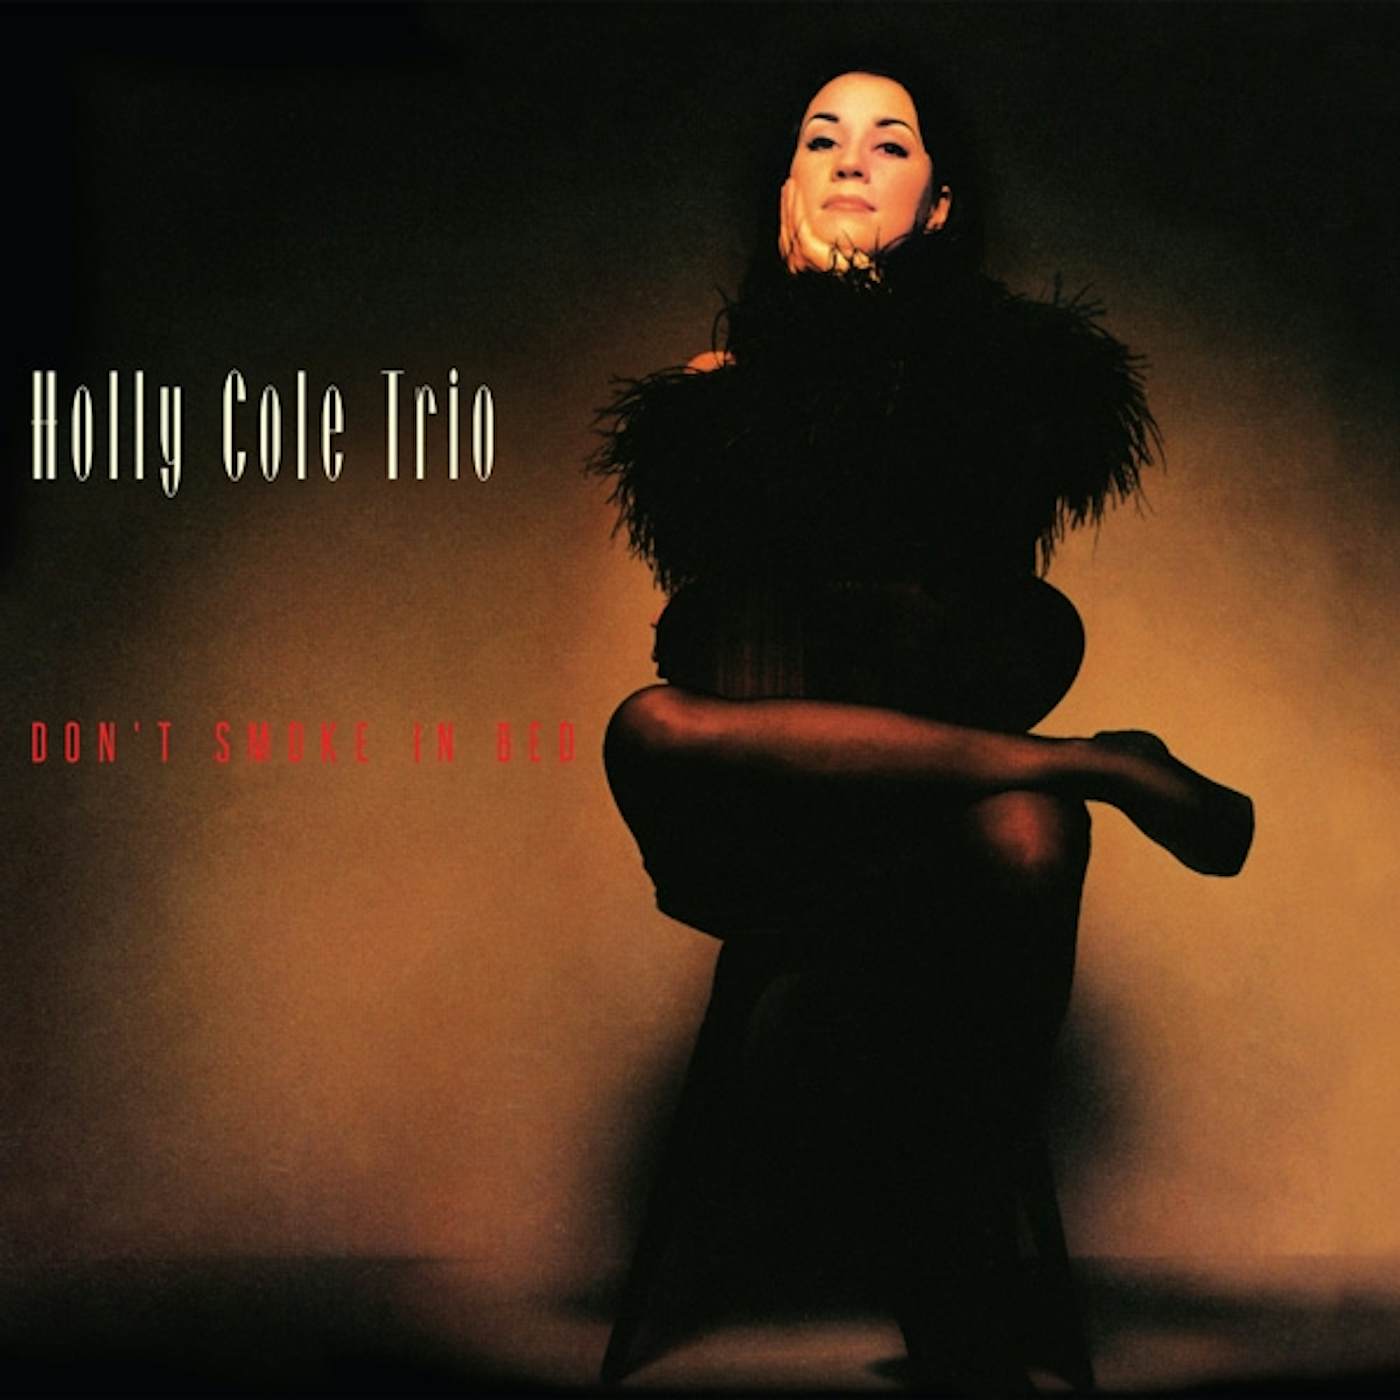 Holly Cole Vinyl Record